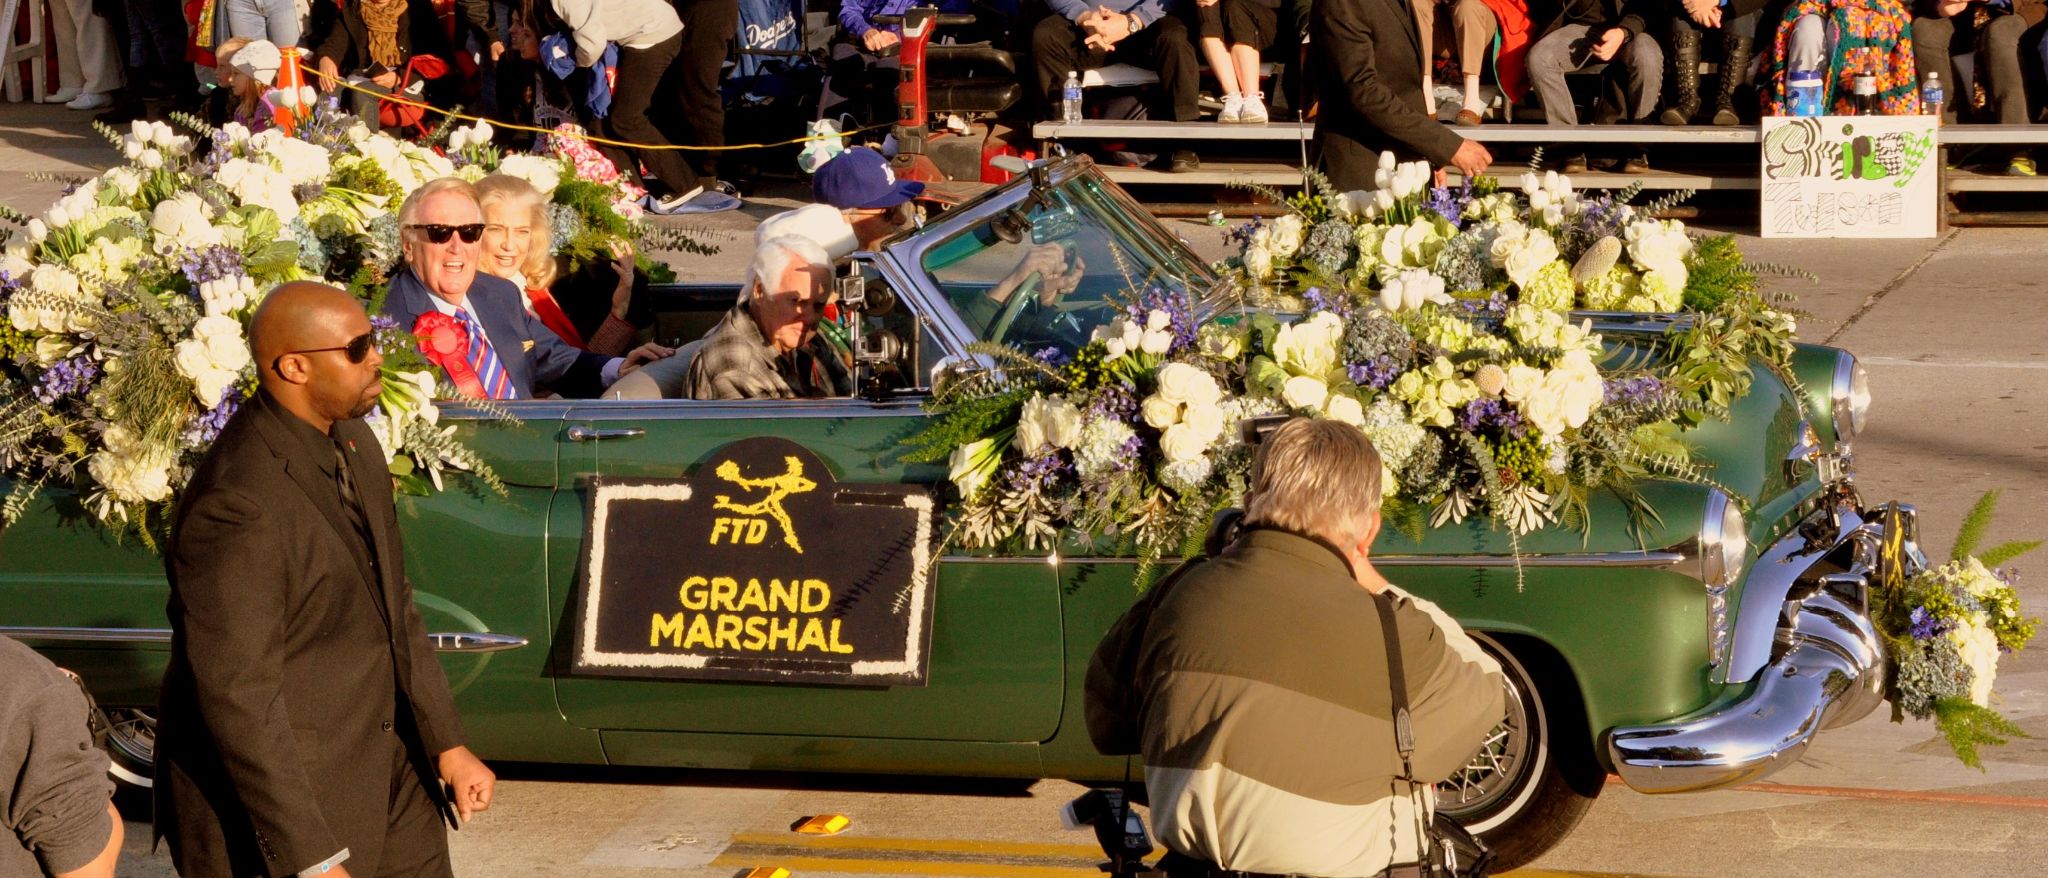 Grand Marshall - Vince Scully (b), Tournament of Roses Parade, Pasadena, CA - 2014-01-01